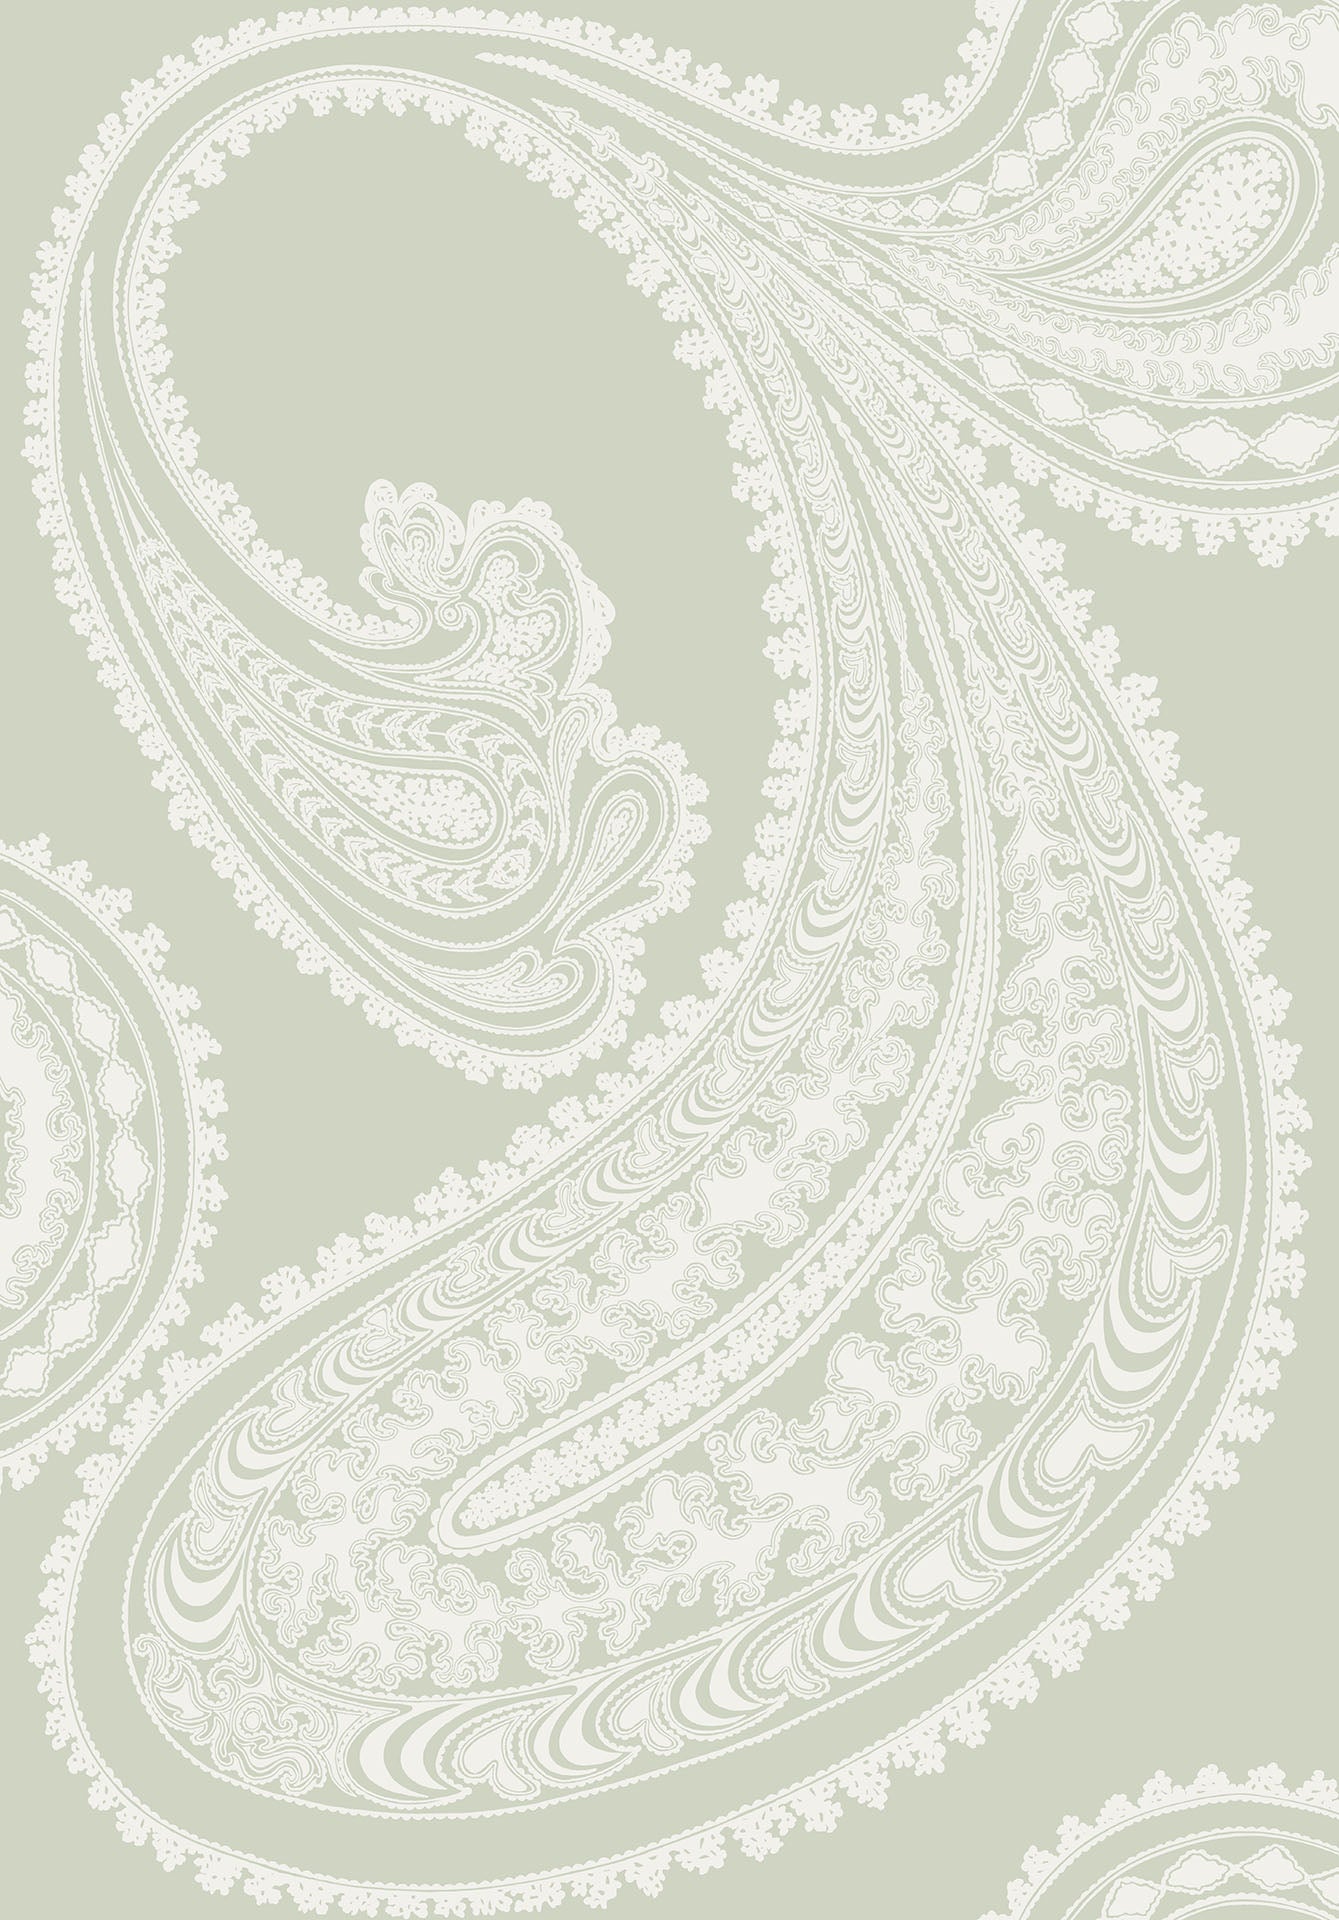 1500 Pink Paisley Background Illustrations RoyaltyFree Vector Graphics   Clip Art  iStock